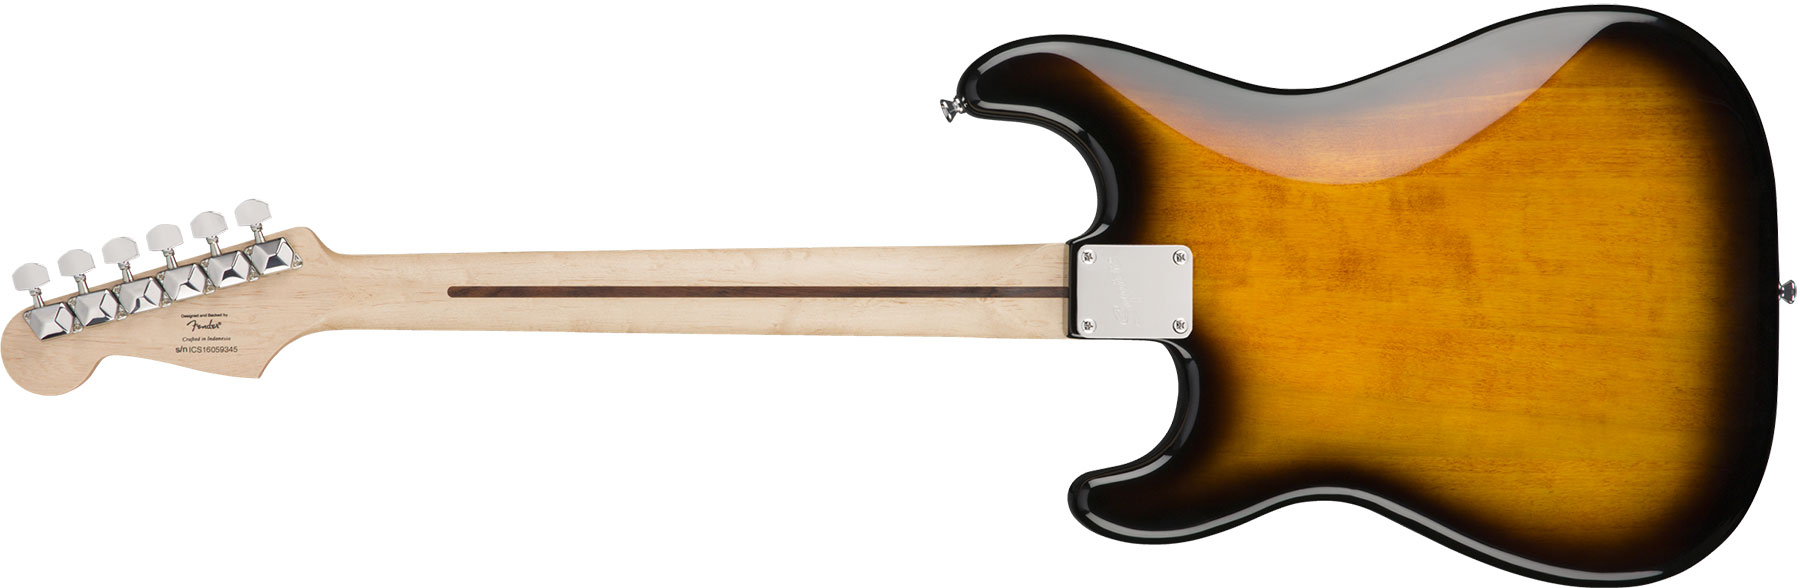 Squier Bullet Stratocaster Ht Sss Rw - Brown Sunburst - Str shape electric guitar - Variation 1